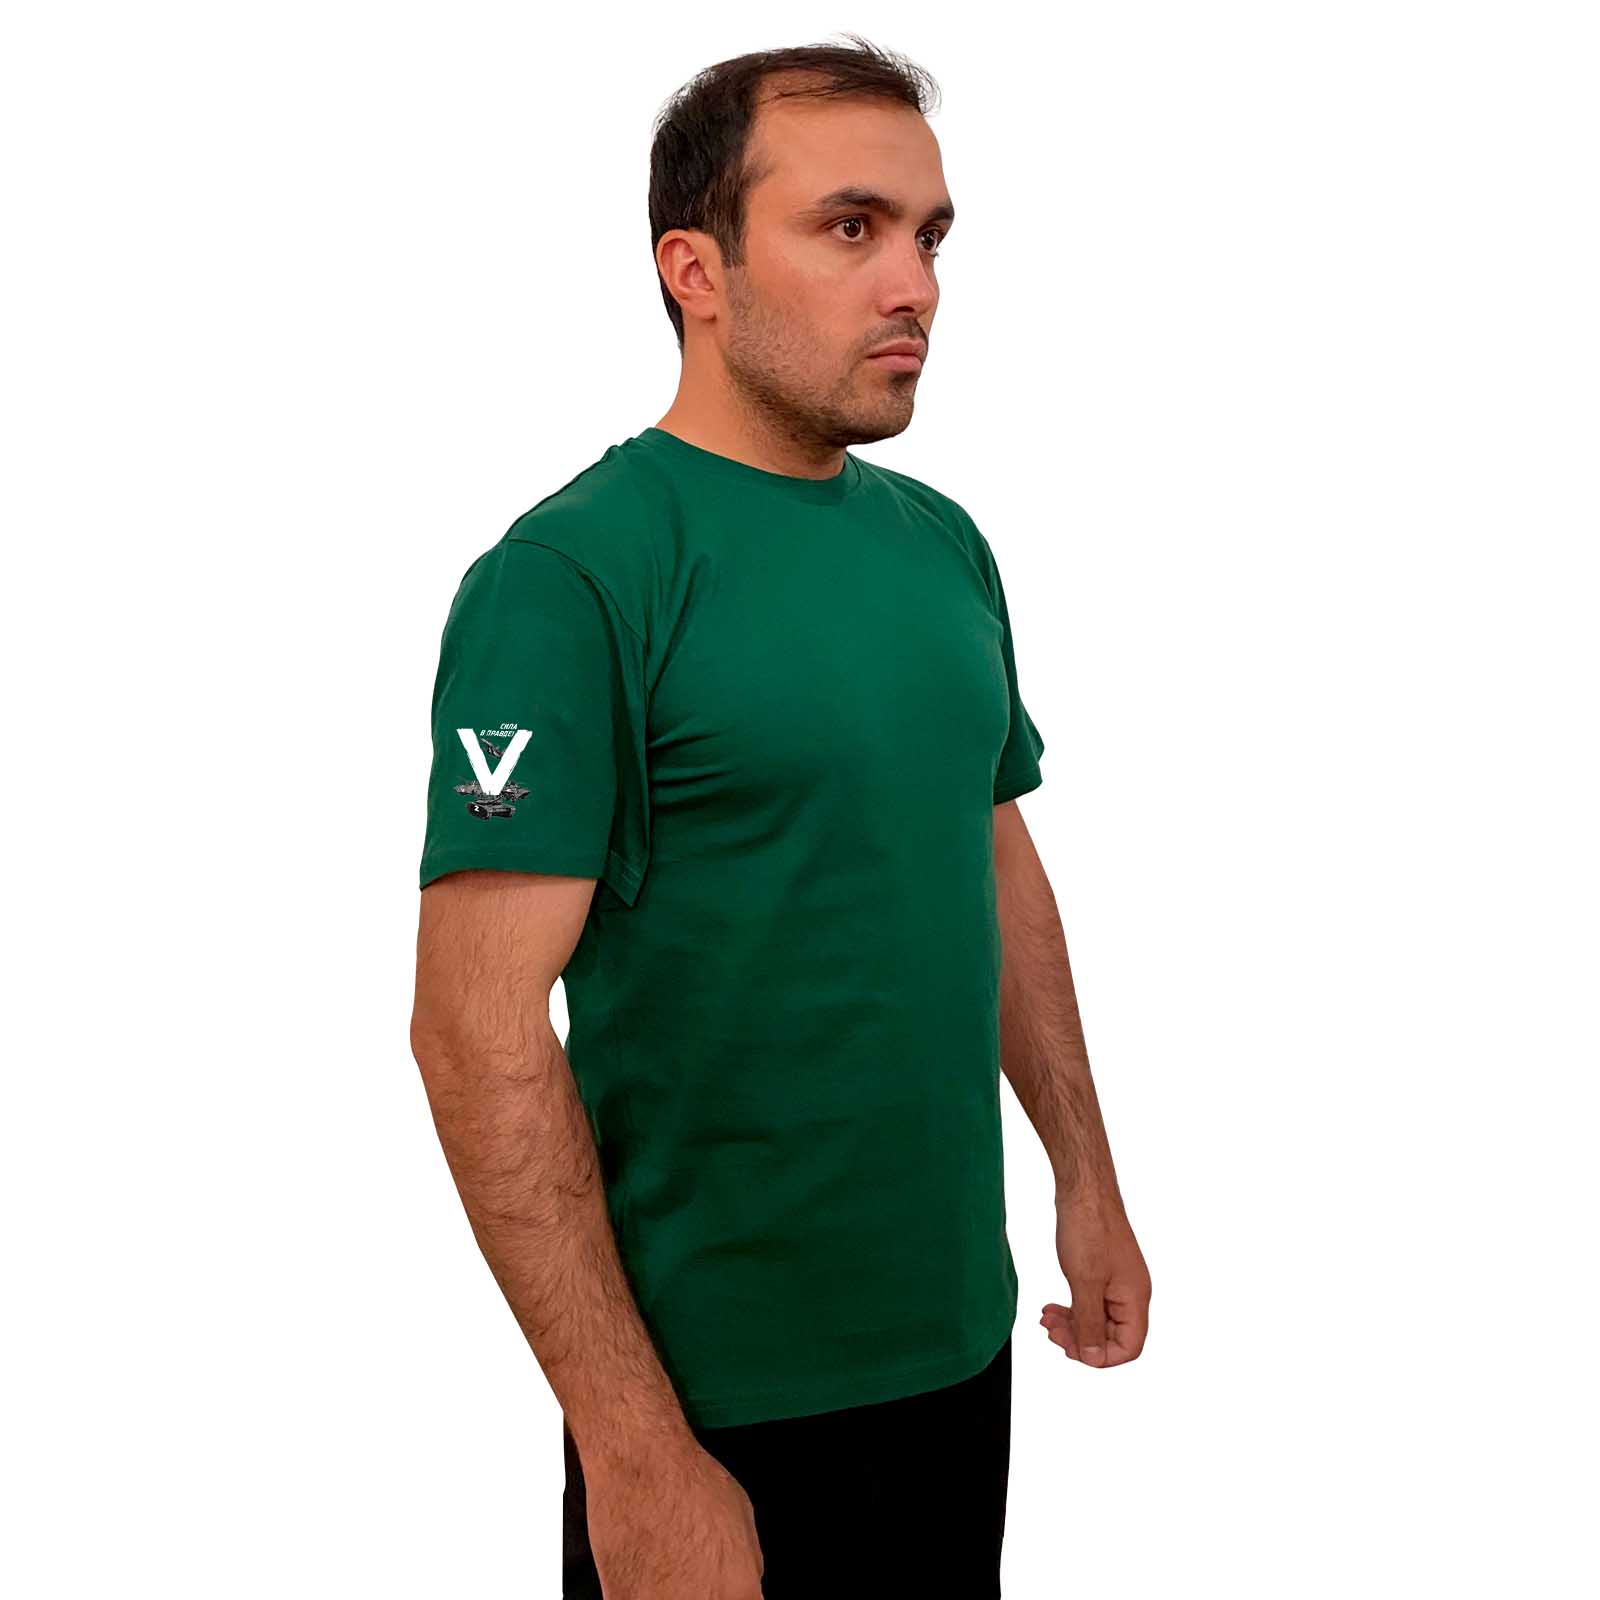 Зелёная футболка с термопереводкой V на рукаве